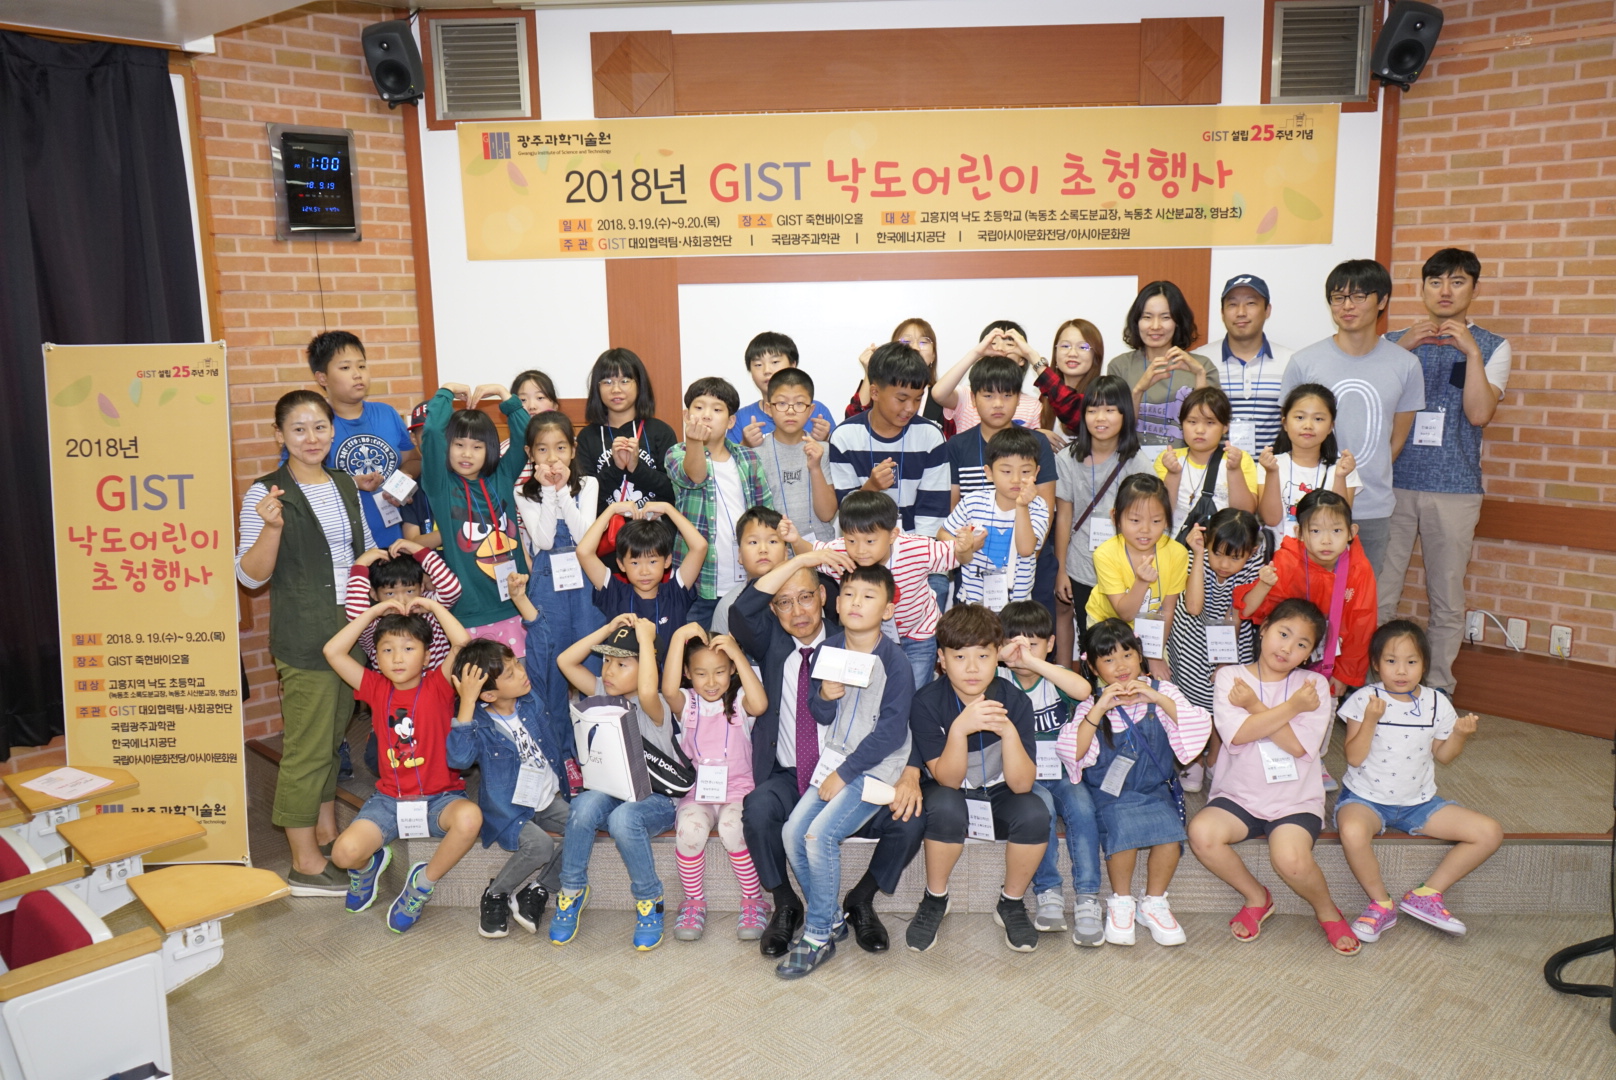 GIST, 고흥지역 낙도어린이 초청해 과학-문화 체험 프로그램 행사 개최 이미지